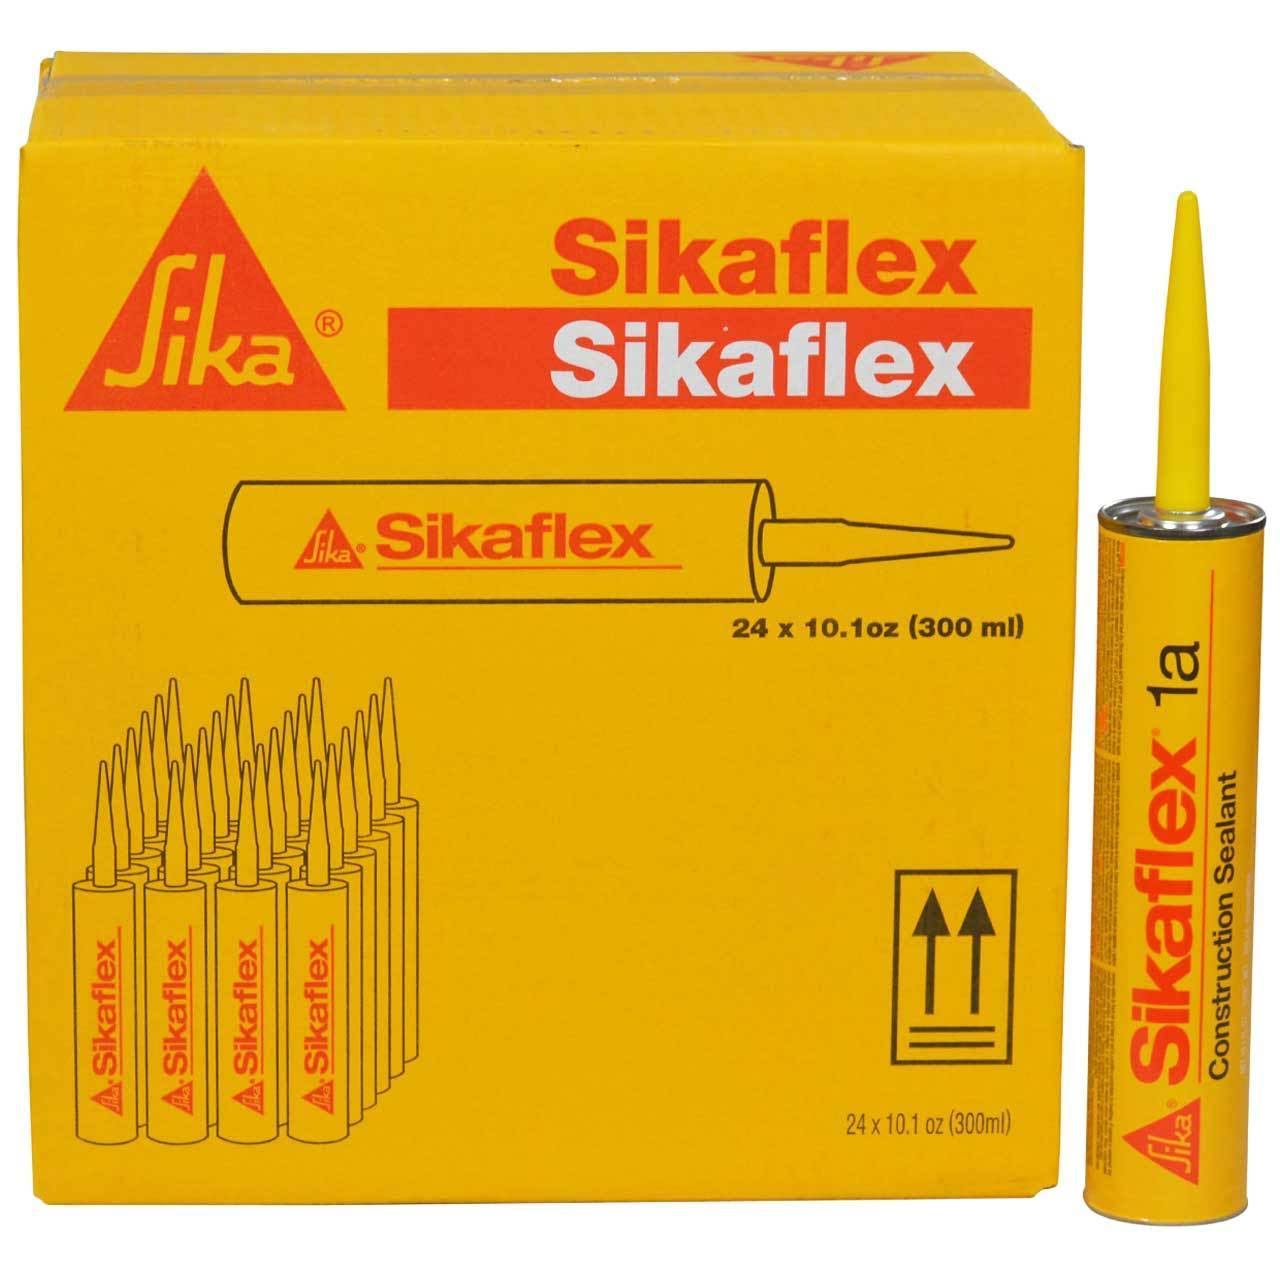 Sikaflex 1A Polyurethane Premium Grade High Performance Elastomeric Sealant - Gray, 10.3oz